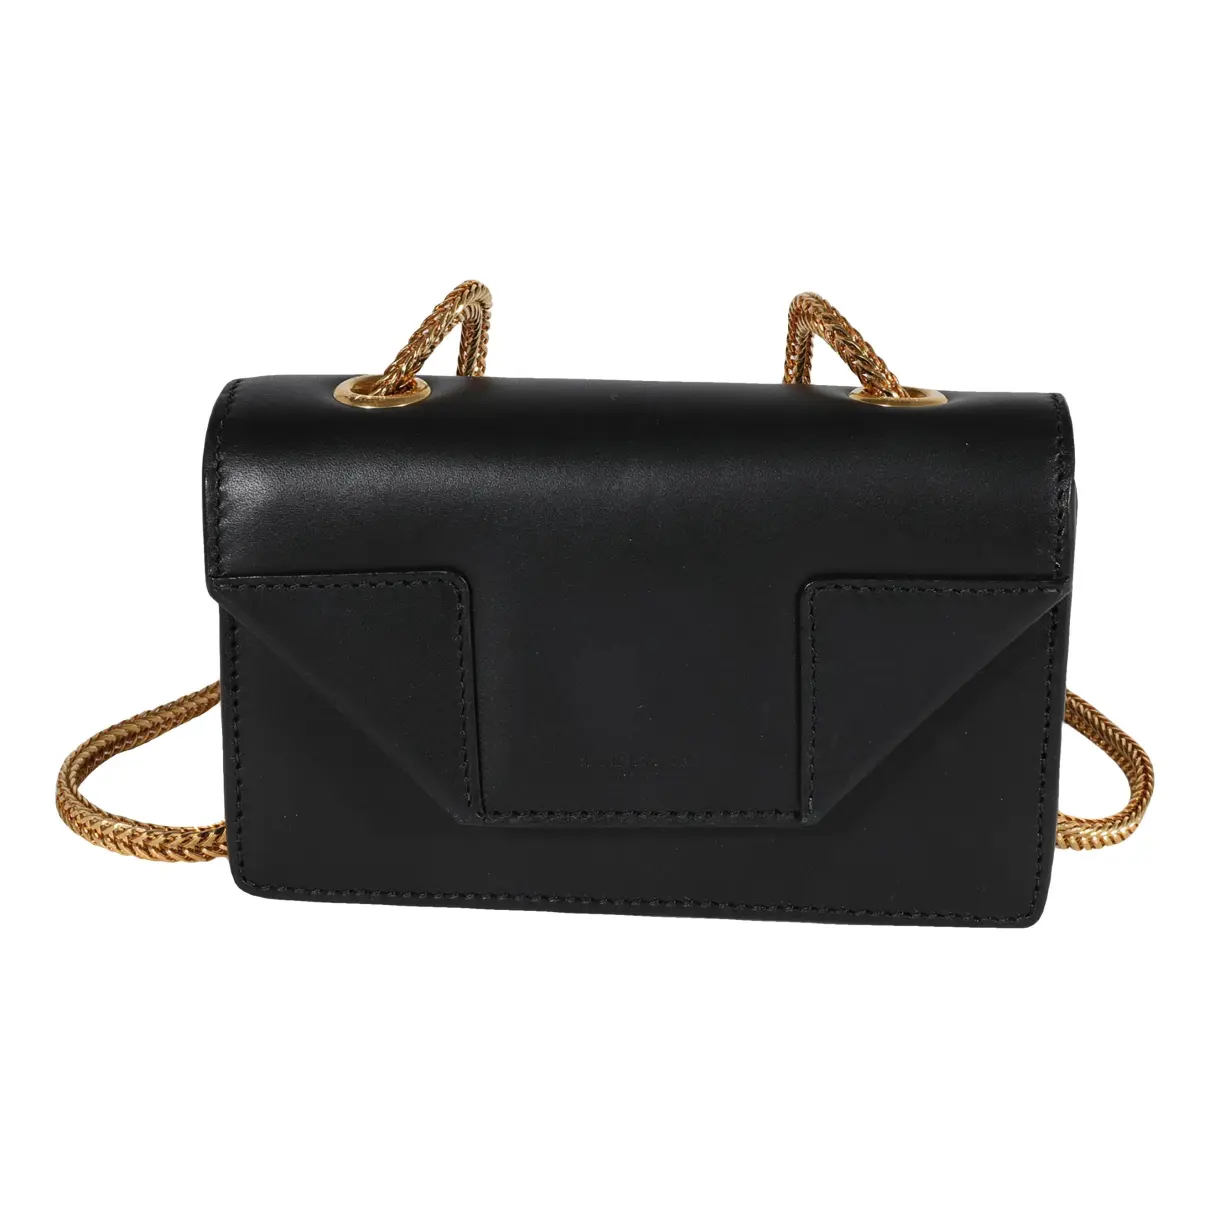 Betty leather handbag